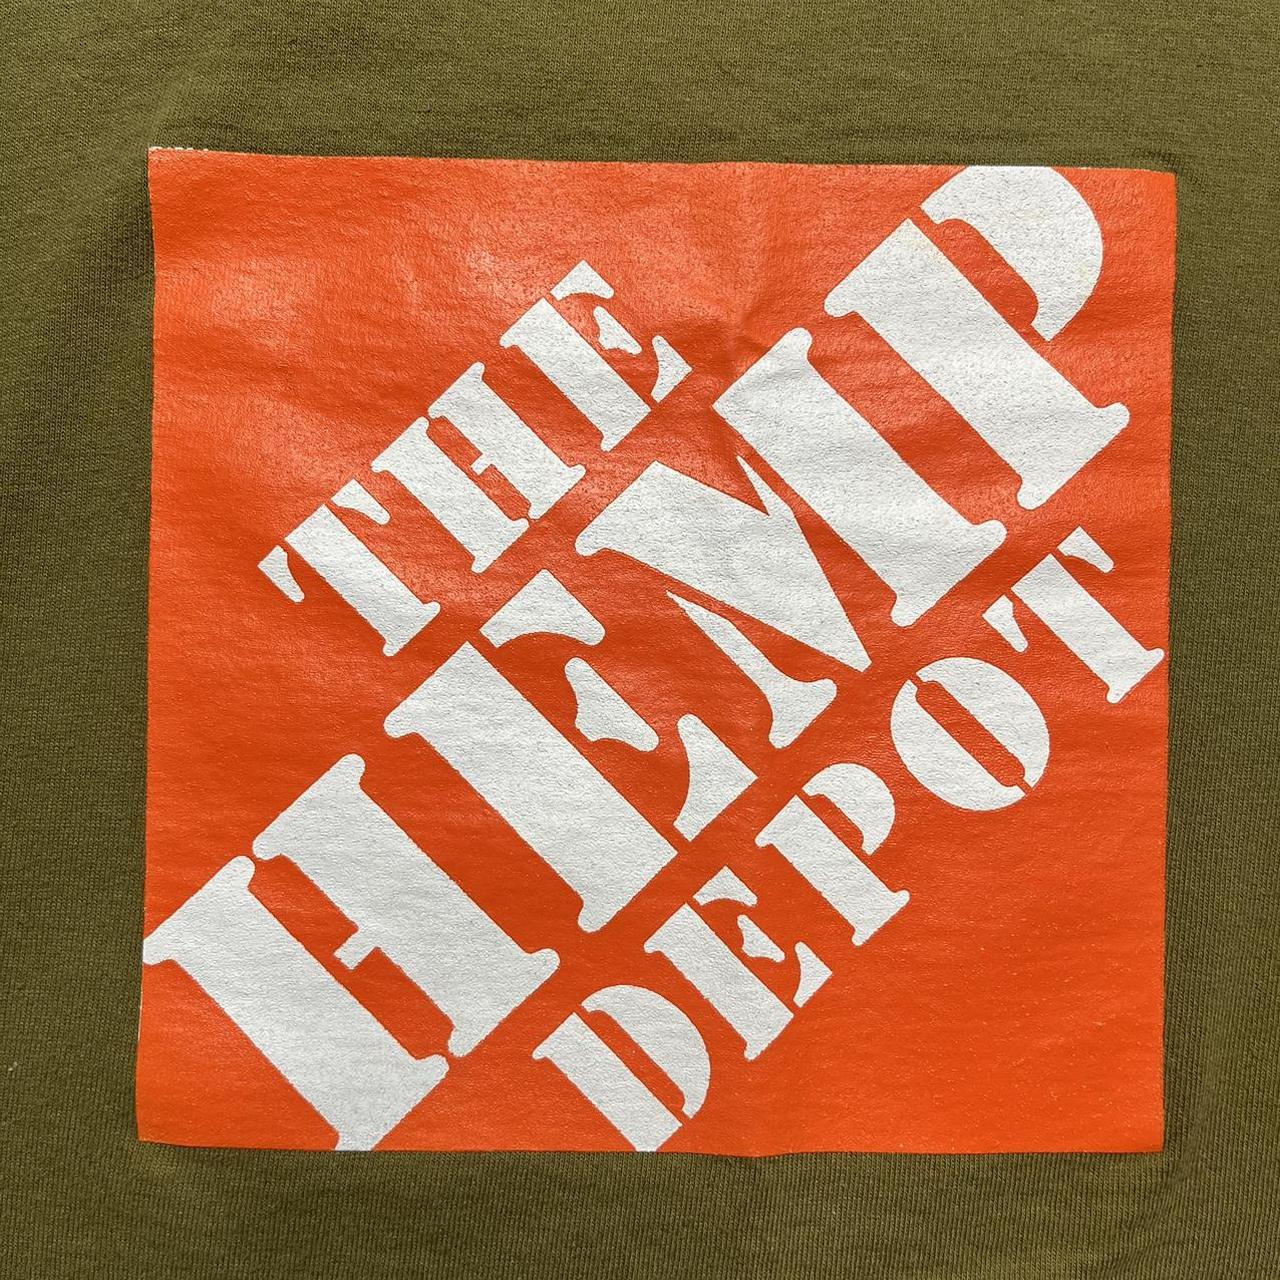 Vintage Hemp Depot Shirt Size: Large fits 20.5 x... - Depop